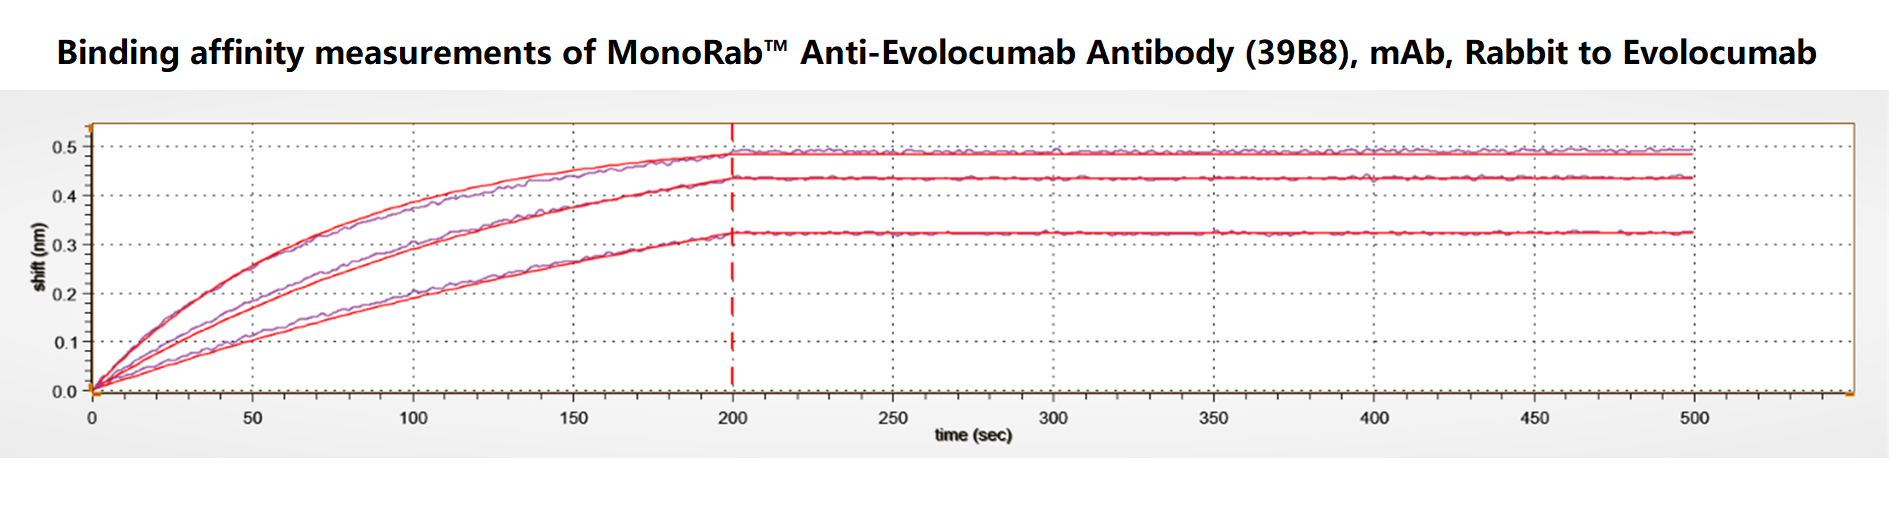 GenScript’s anti-idiotype antibodies